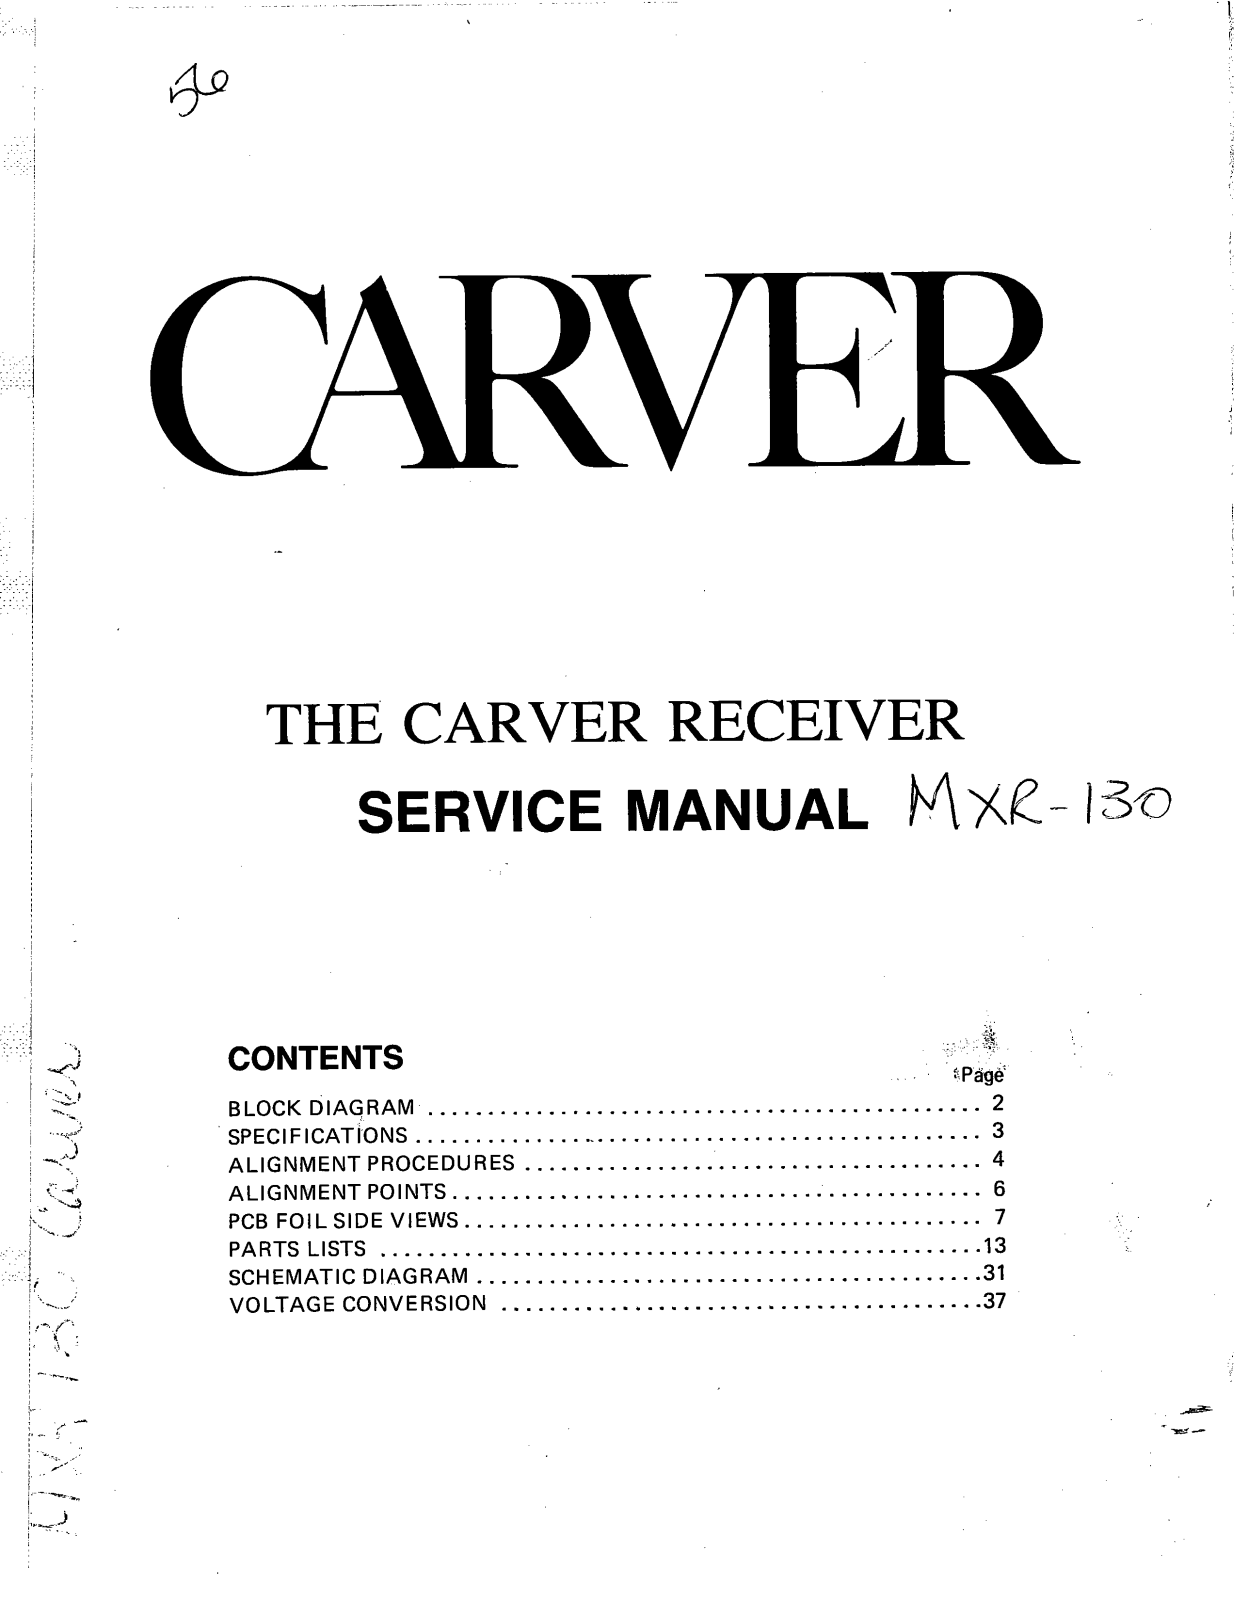 Carver MXR-130 Service manual